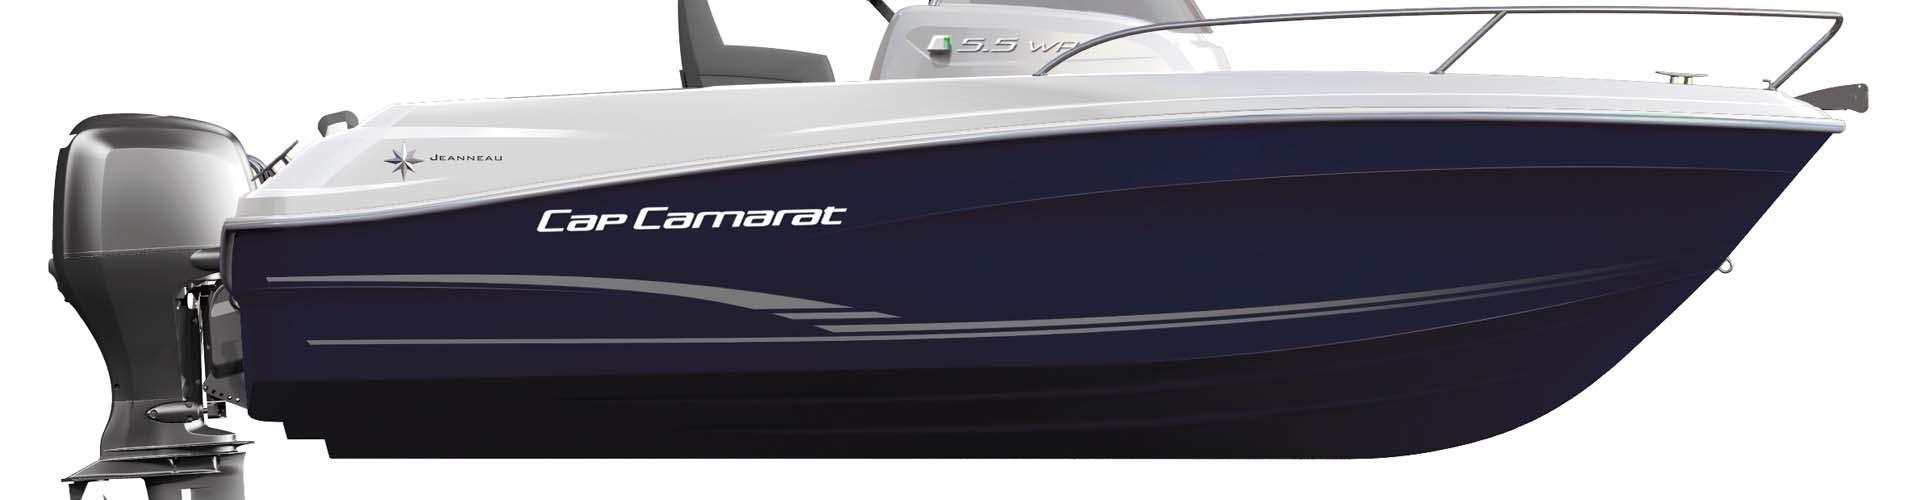 Motoryacht Jeanneau Cap Camarat 5.5 WA S2